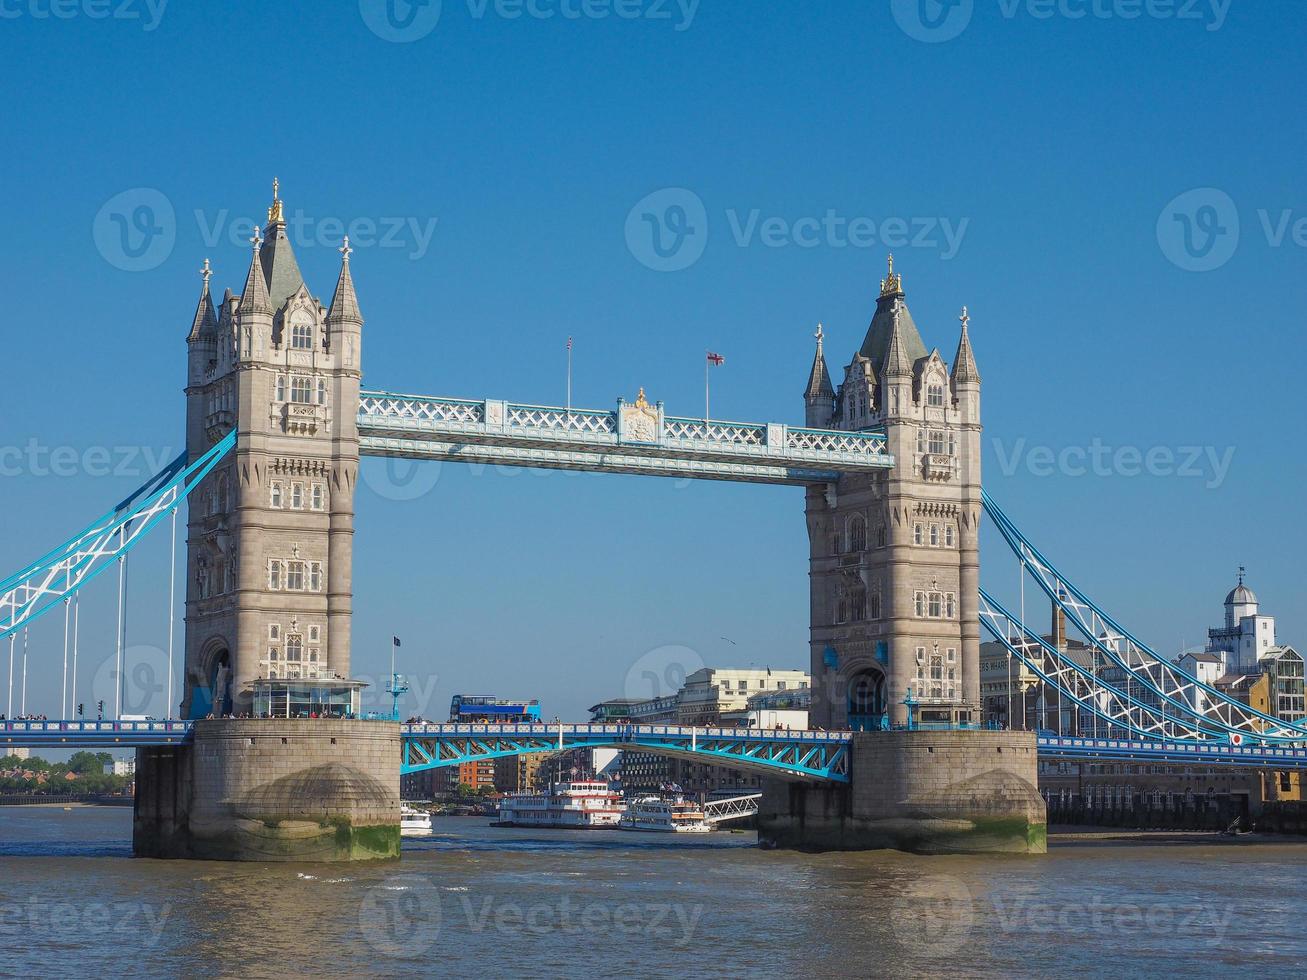 tornbron i London foto